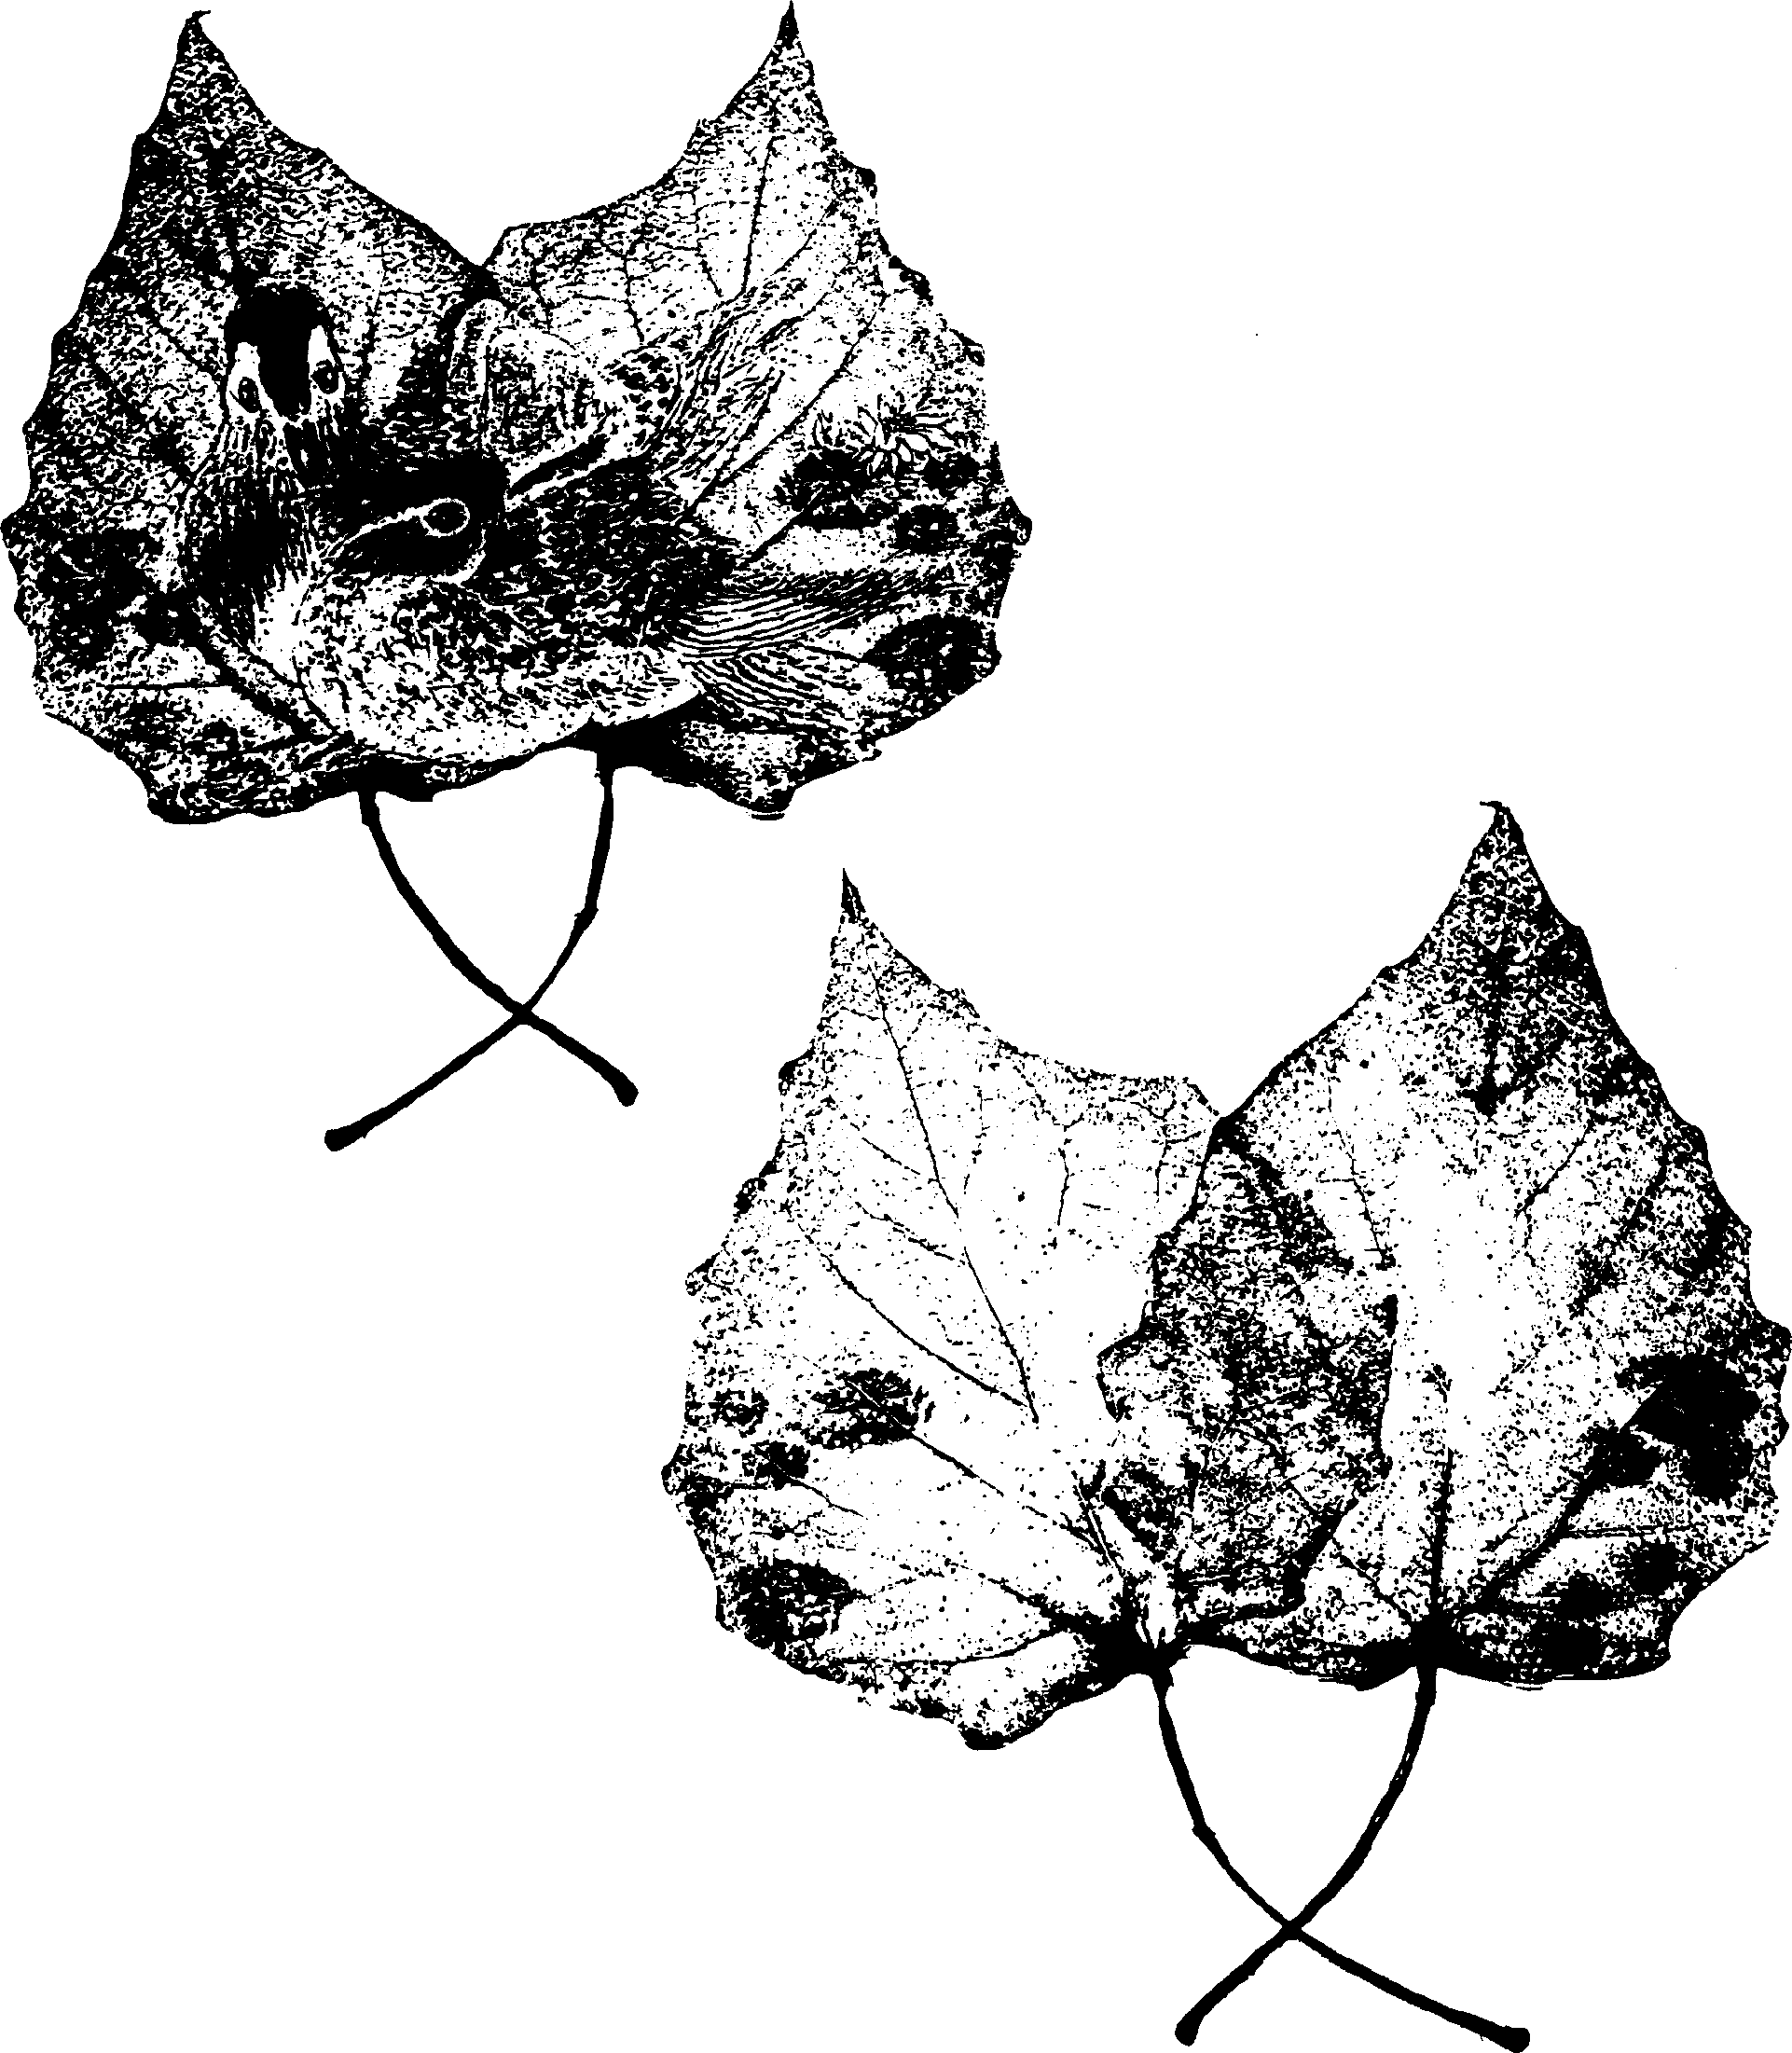 Method for making transparent leaf painting